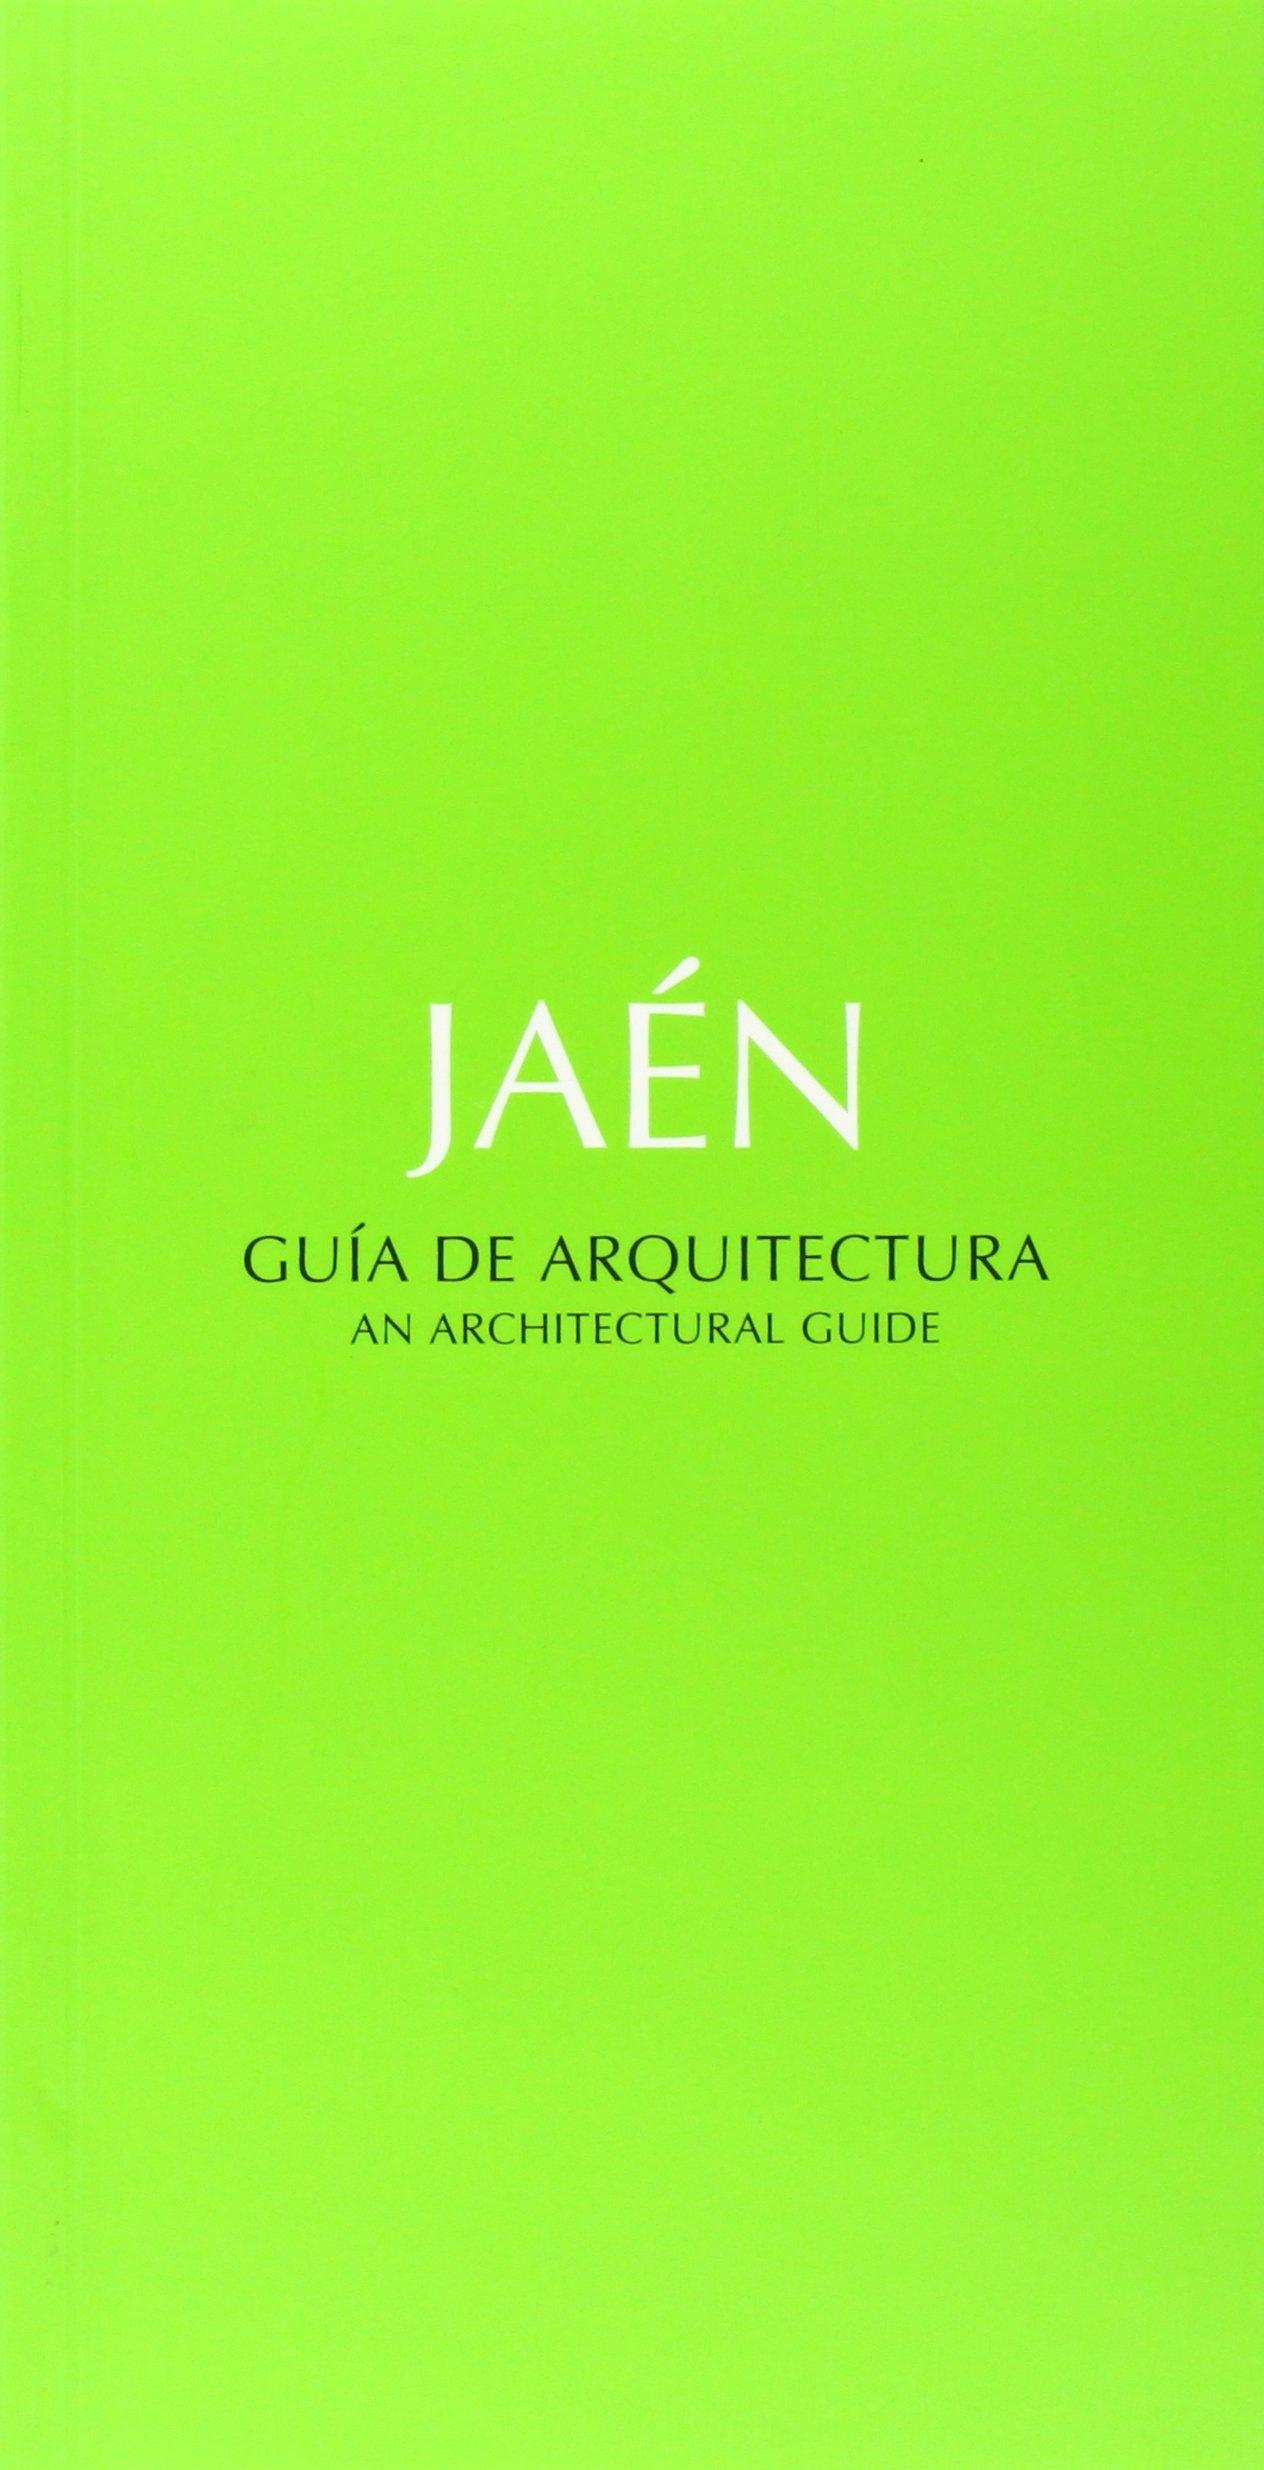 JAEN. GUIA DE ARQUITECTURA DE JAEN "AN ARCHITECTURAL GUIDE"